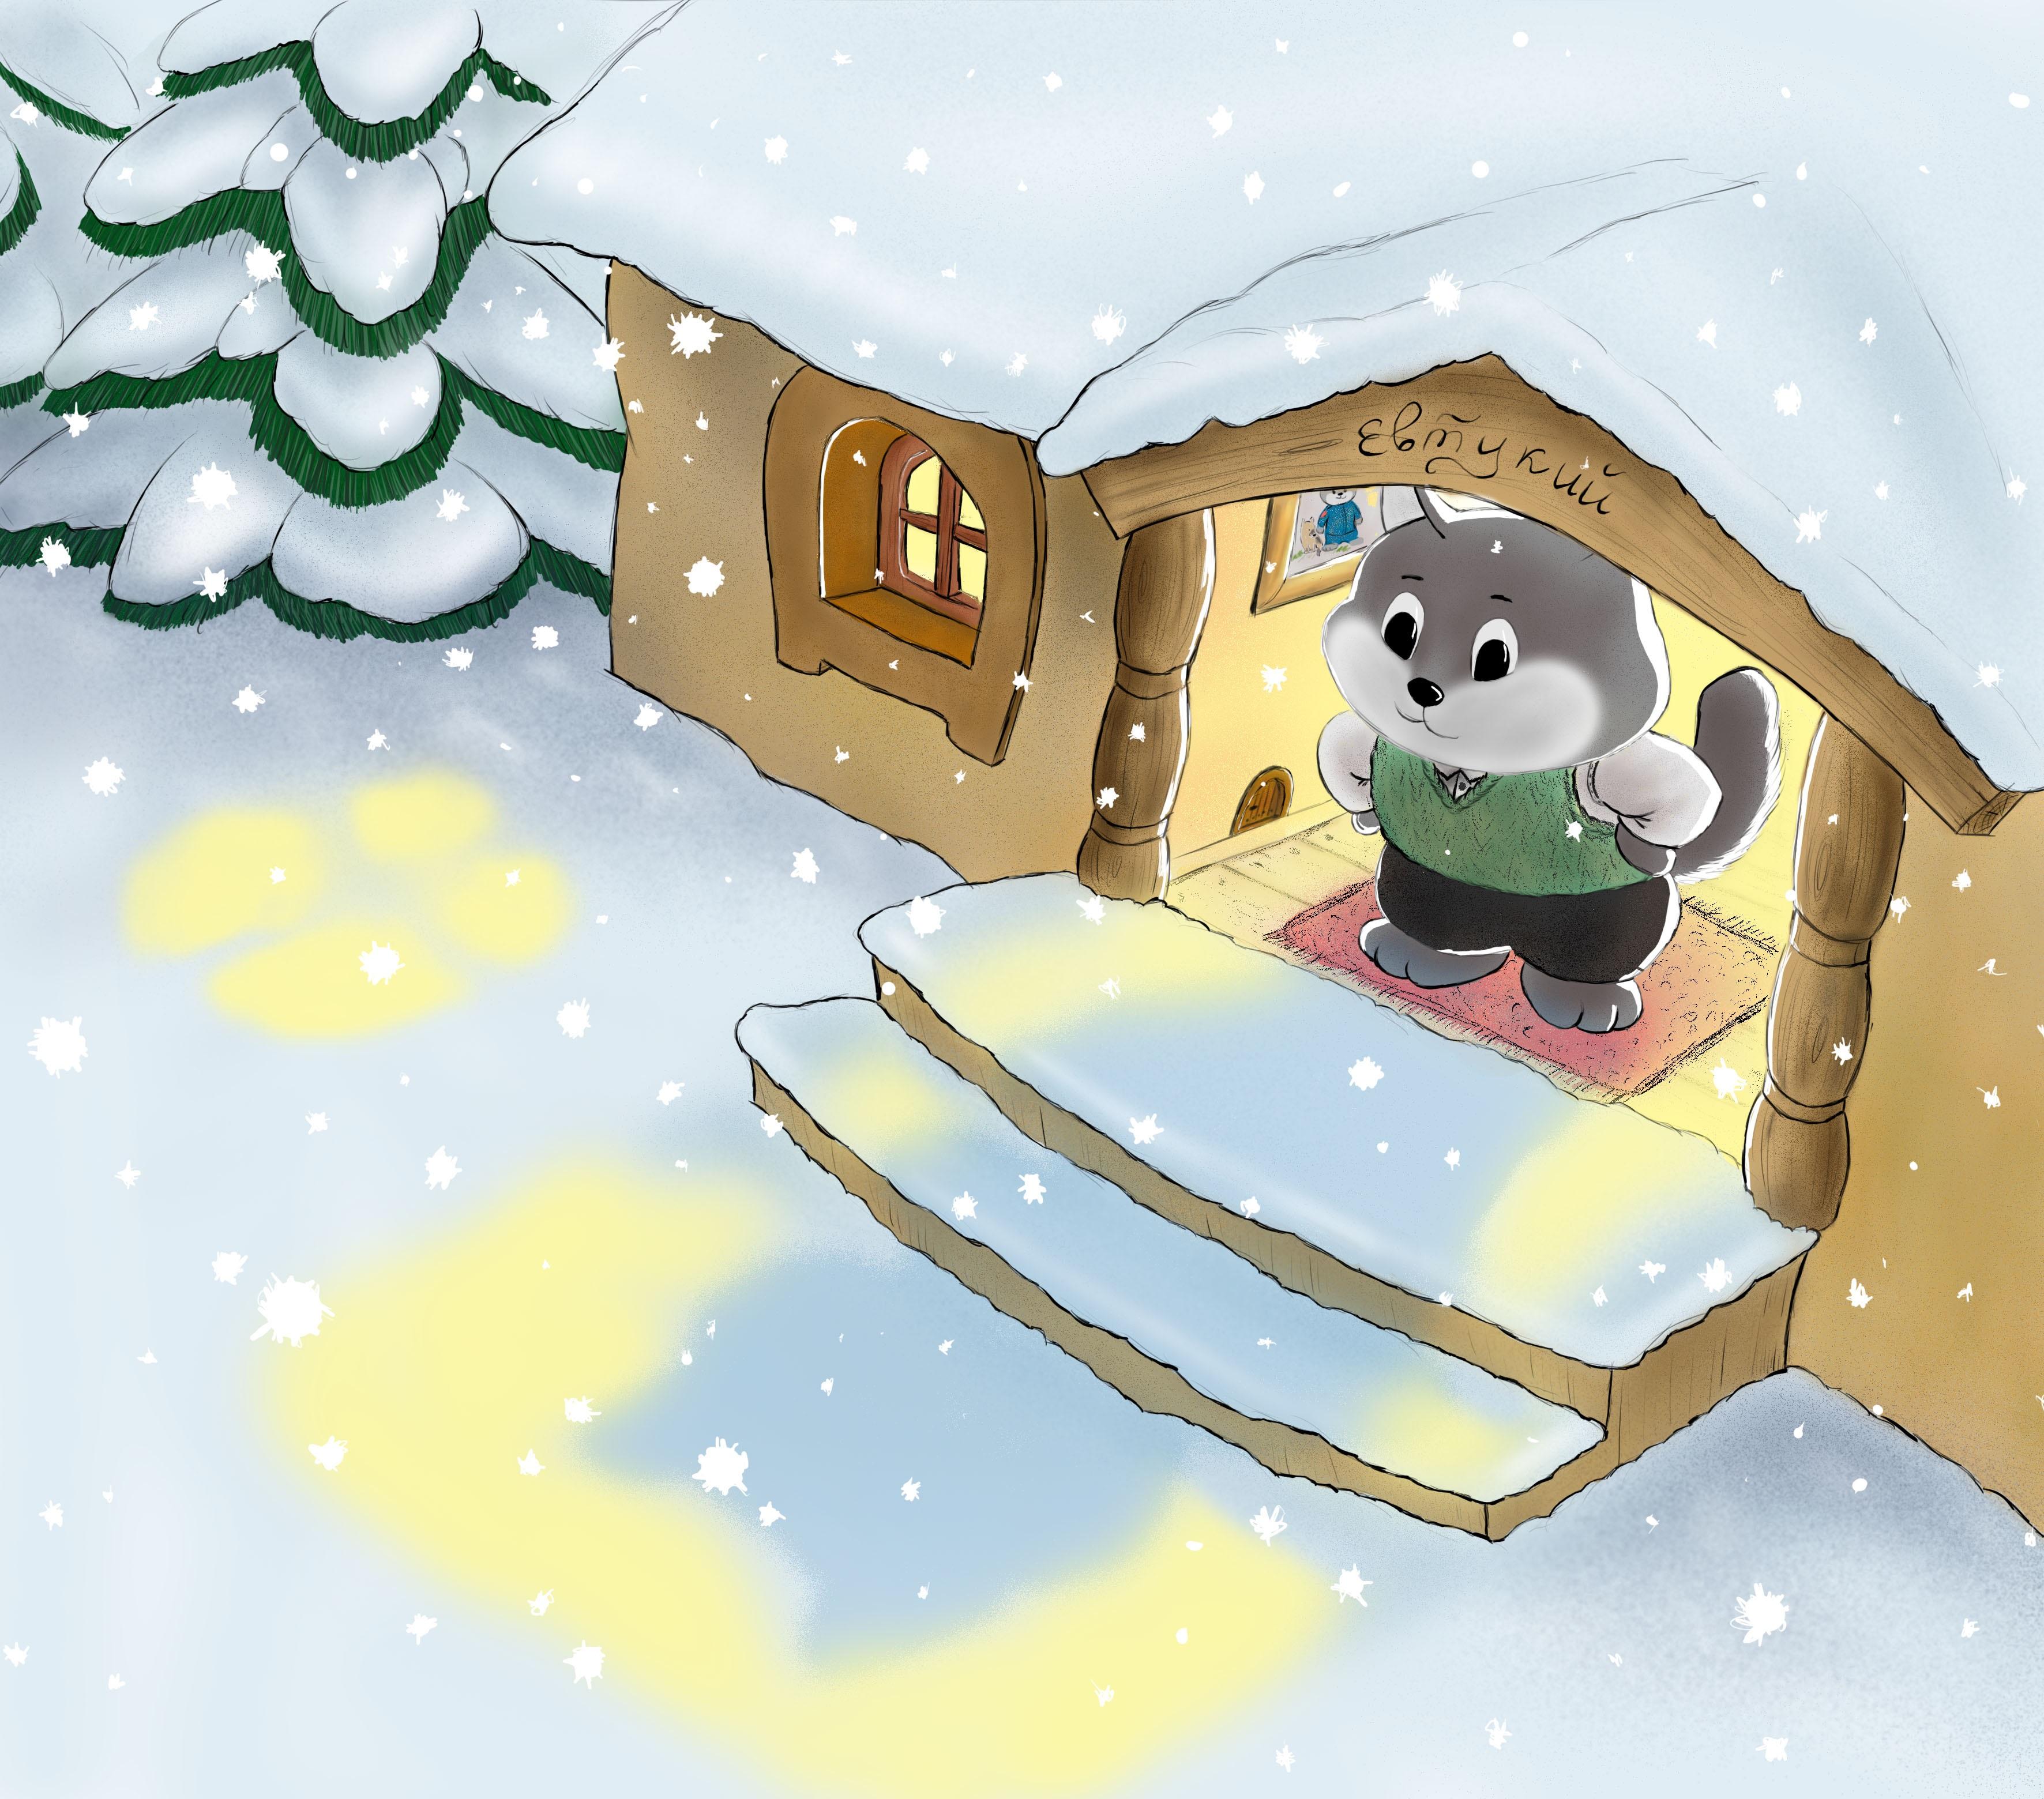 Иллюстрация зима пришла | Illustrators.ru